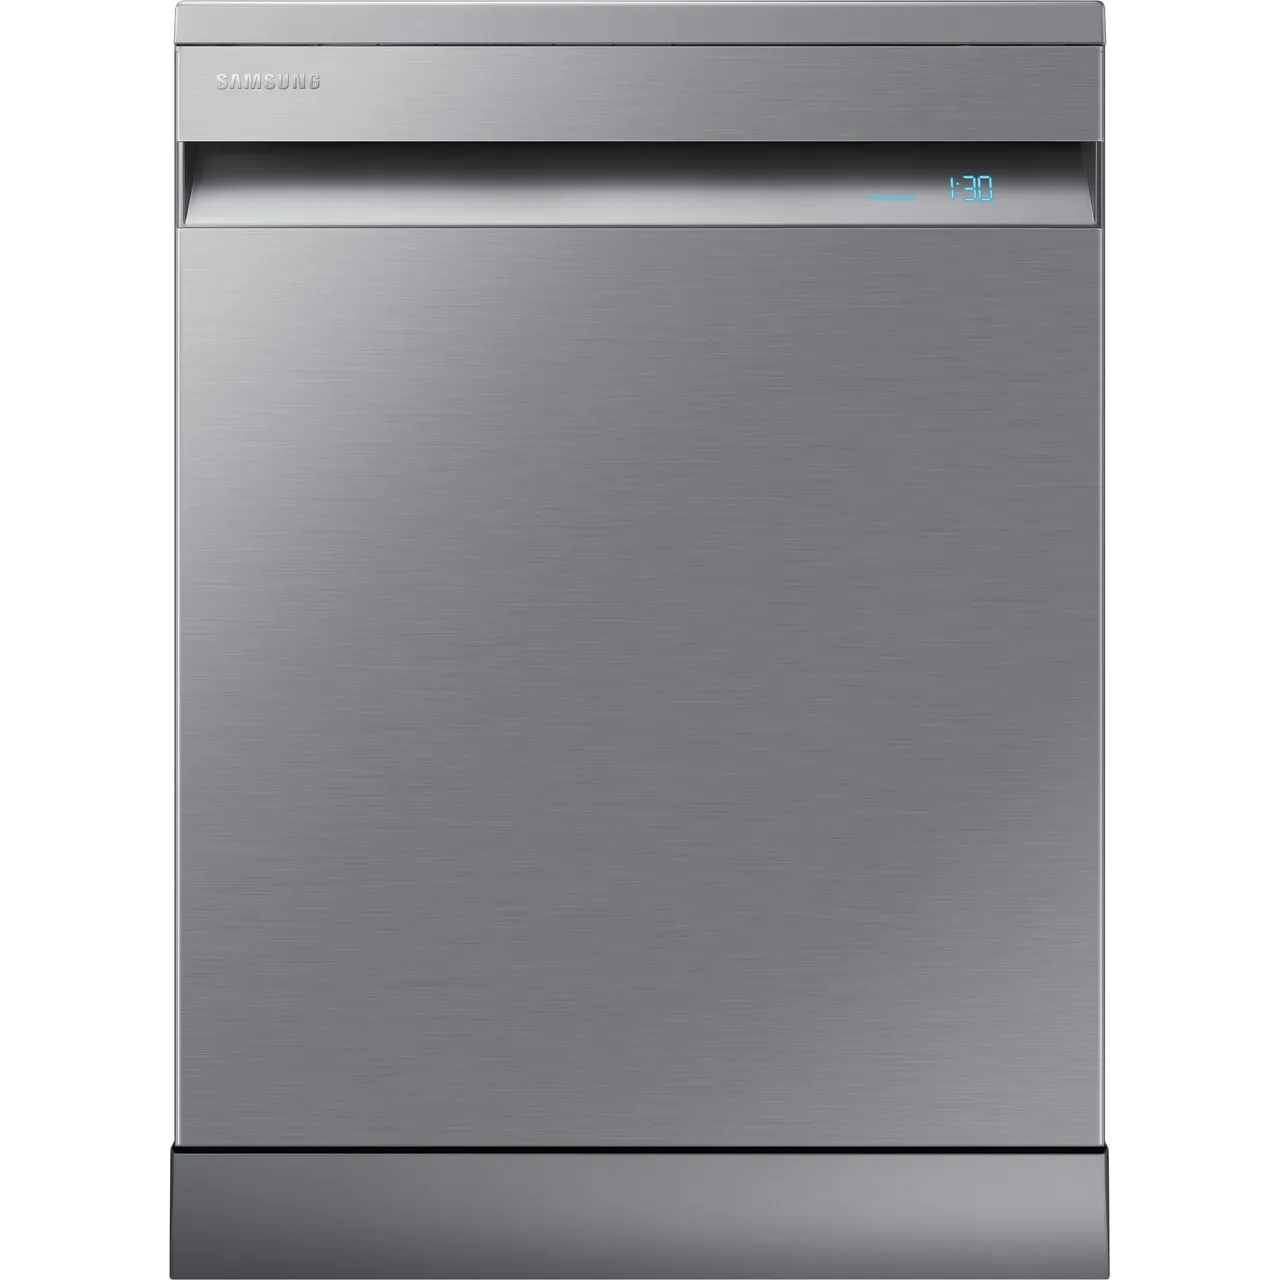 Samsung DW60A8060FS Freestanding Dishwasher 60cm Stainless Steel GRADE B